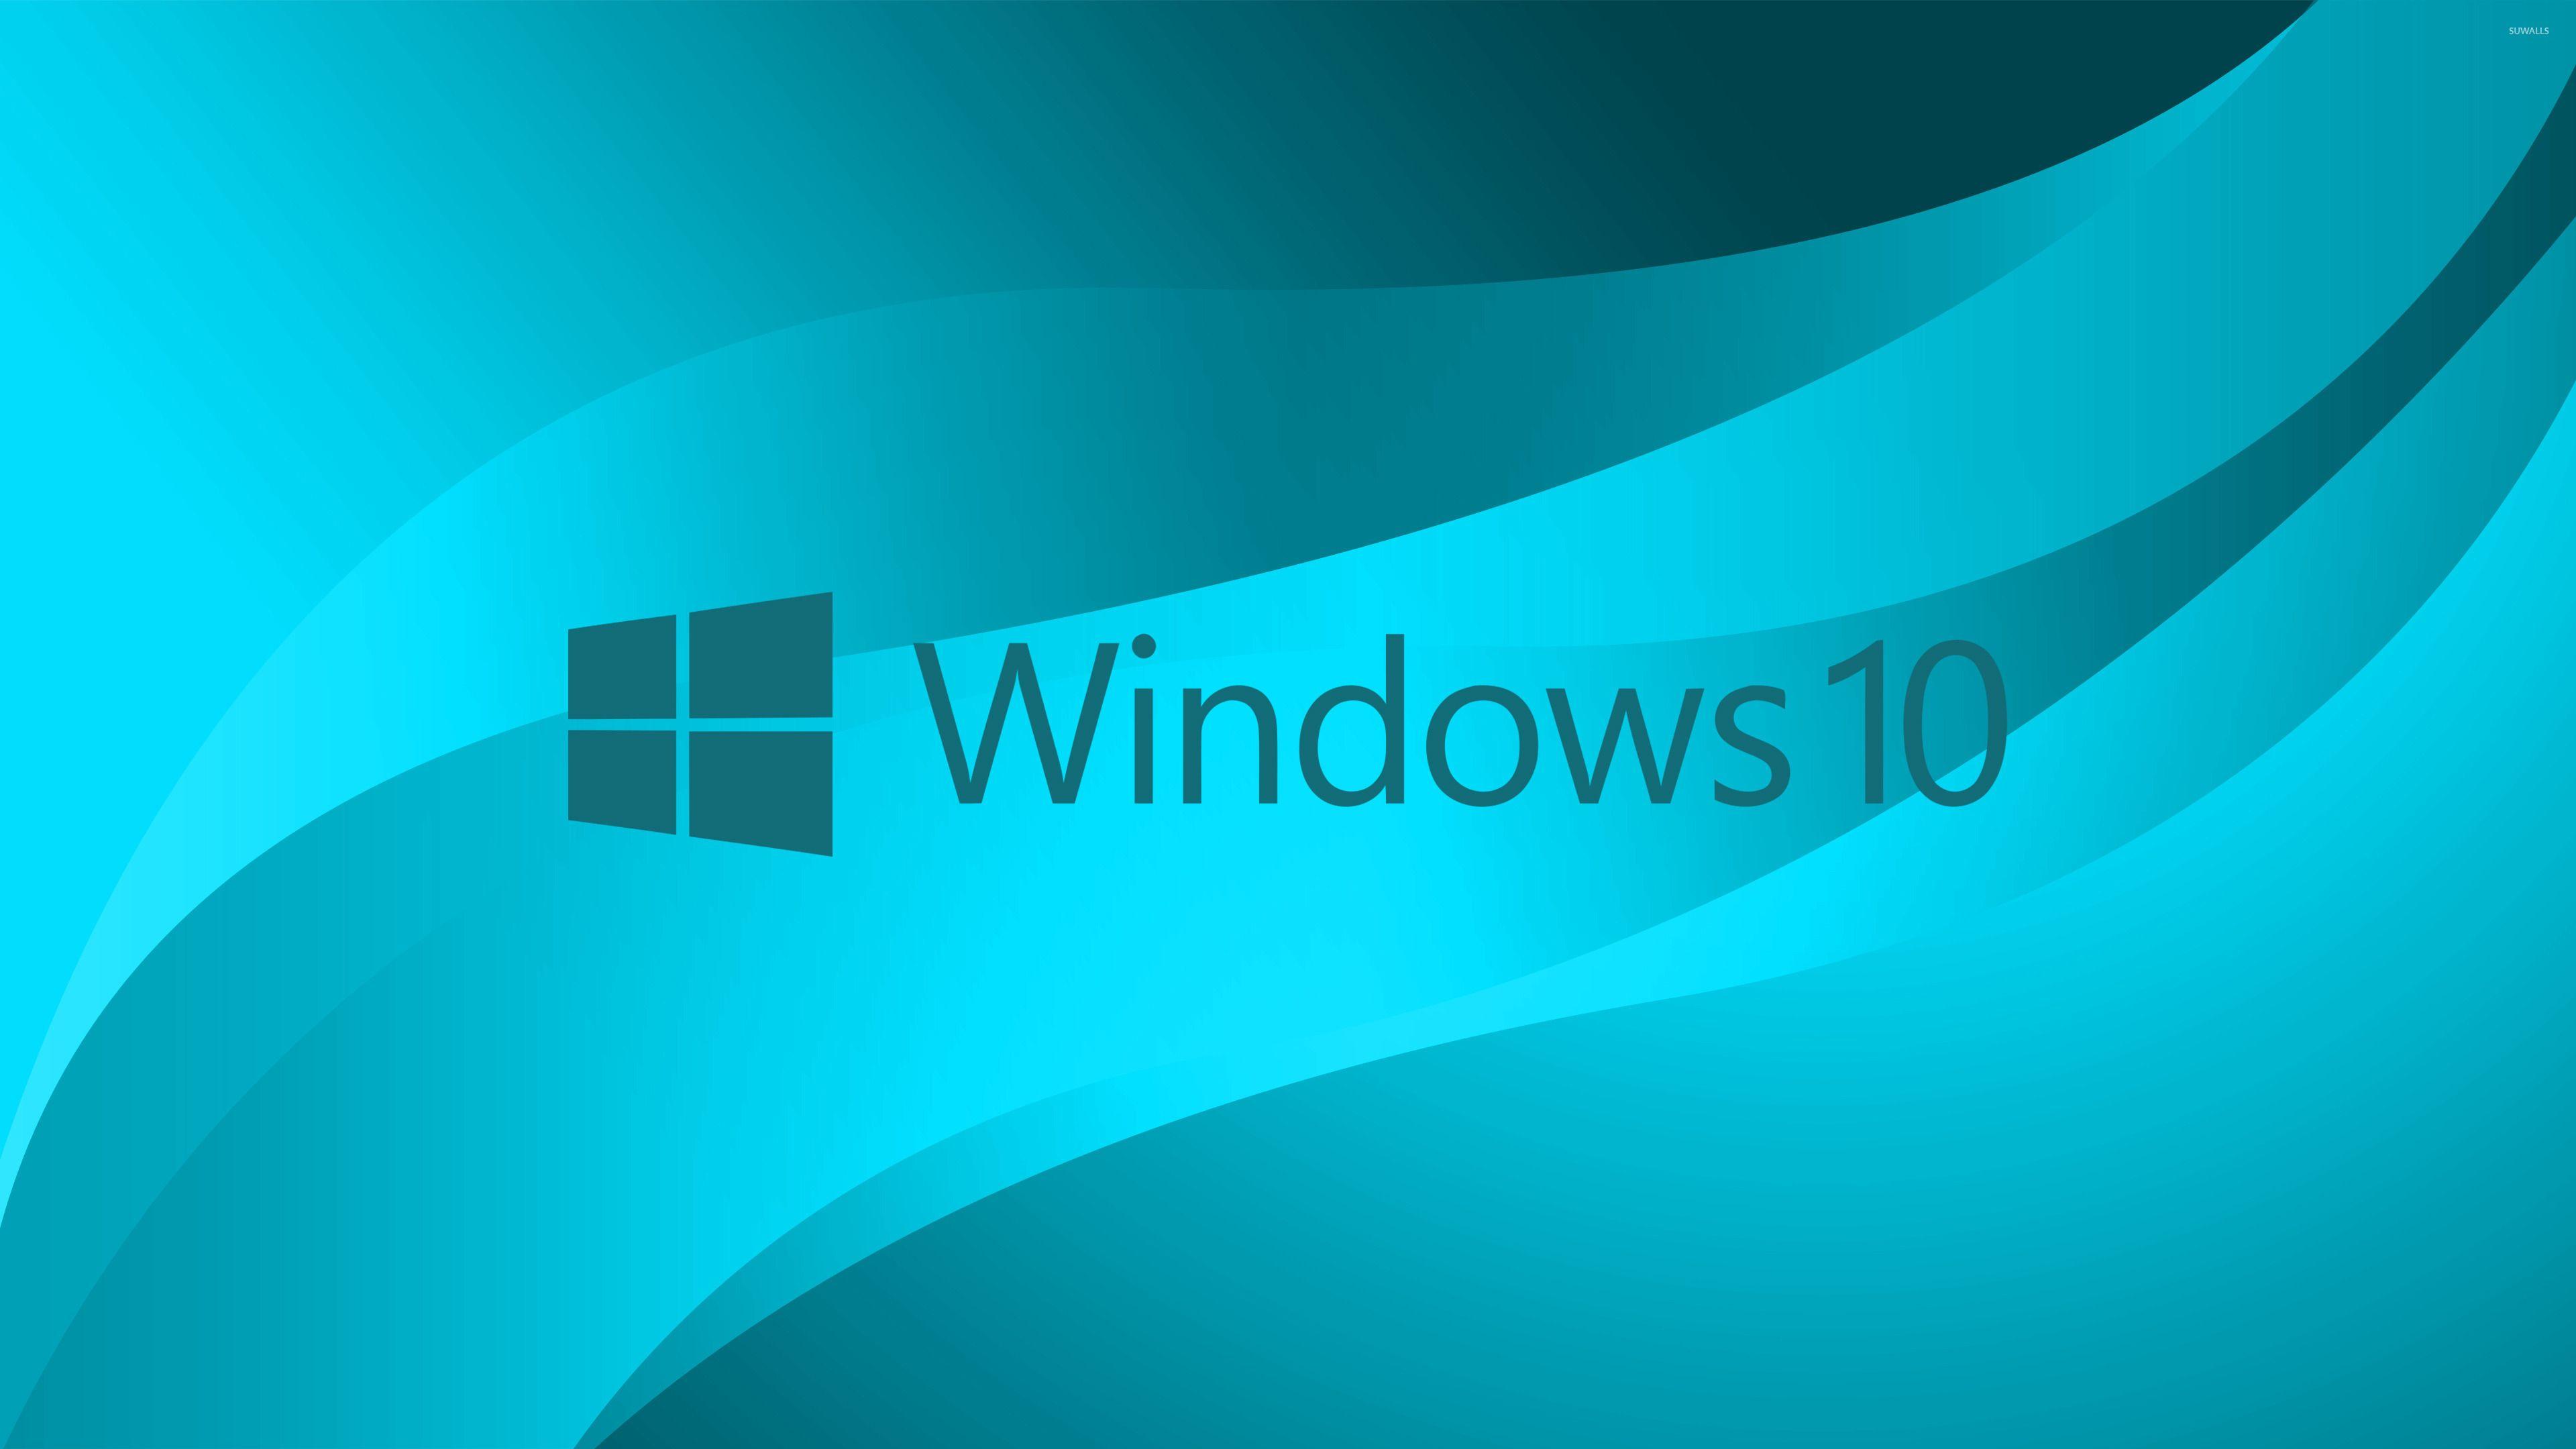 Windows 10 blue text logo on light blue wallpapers